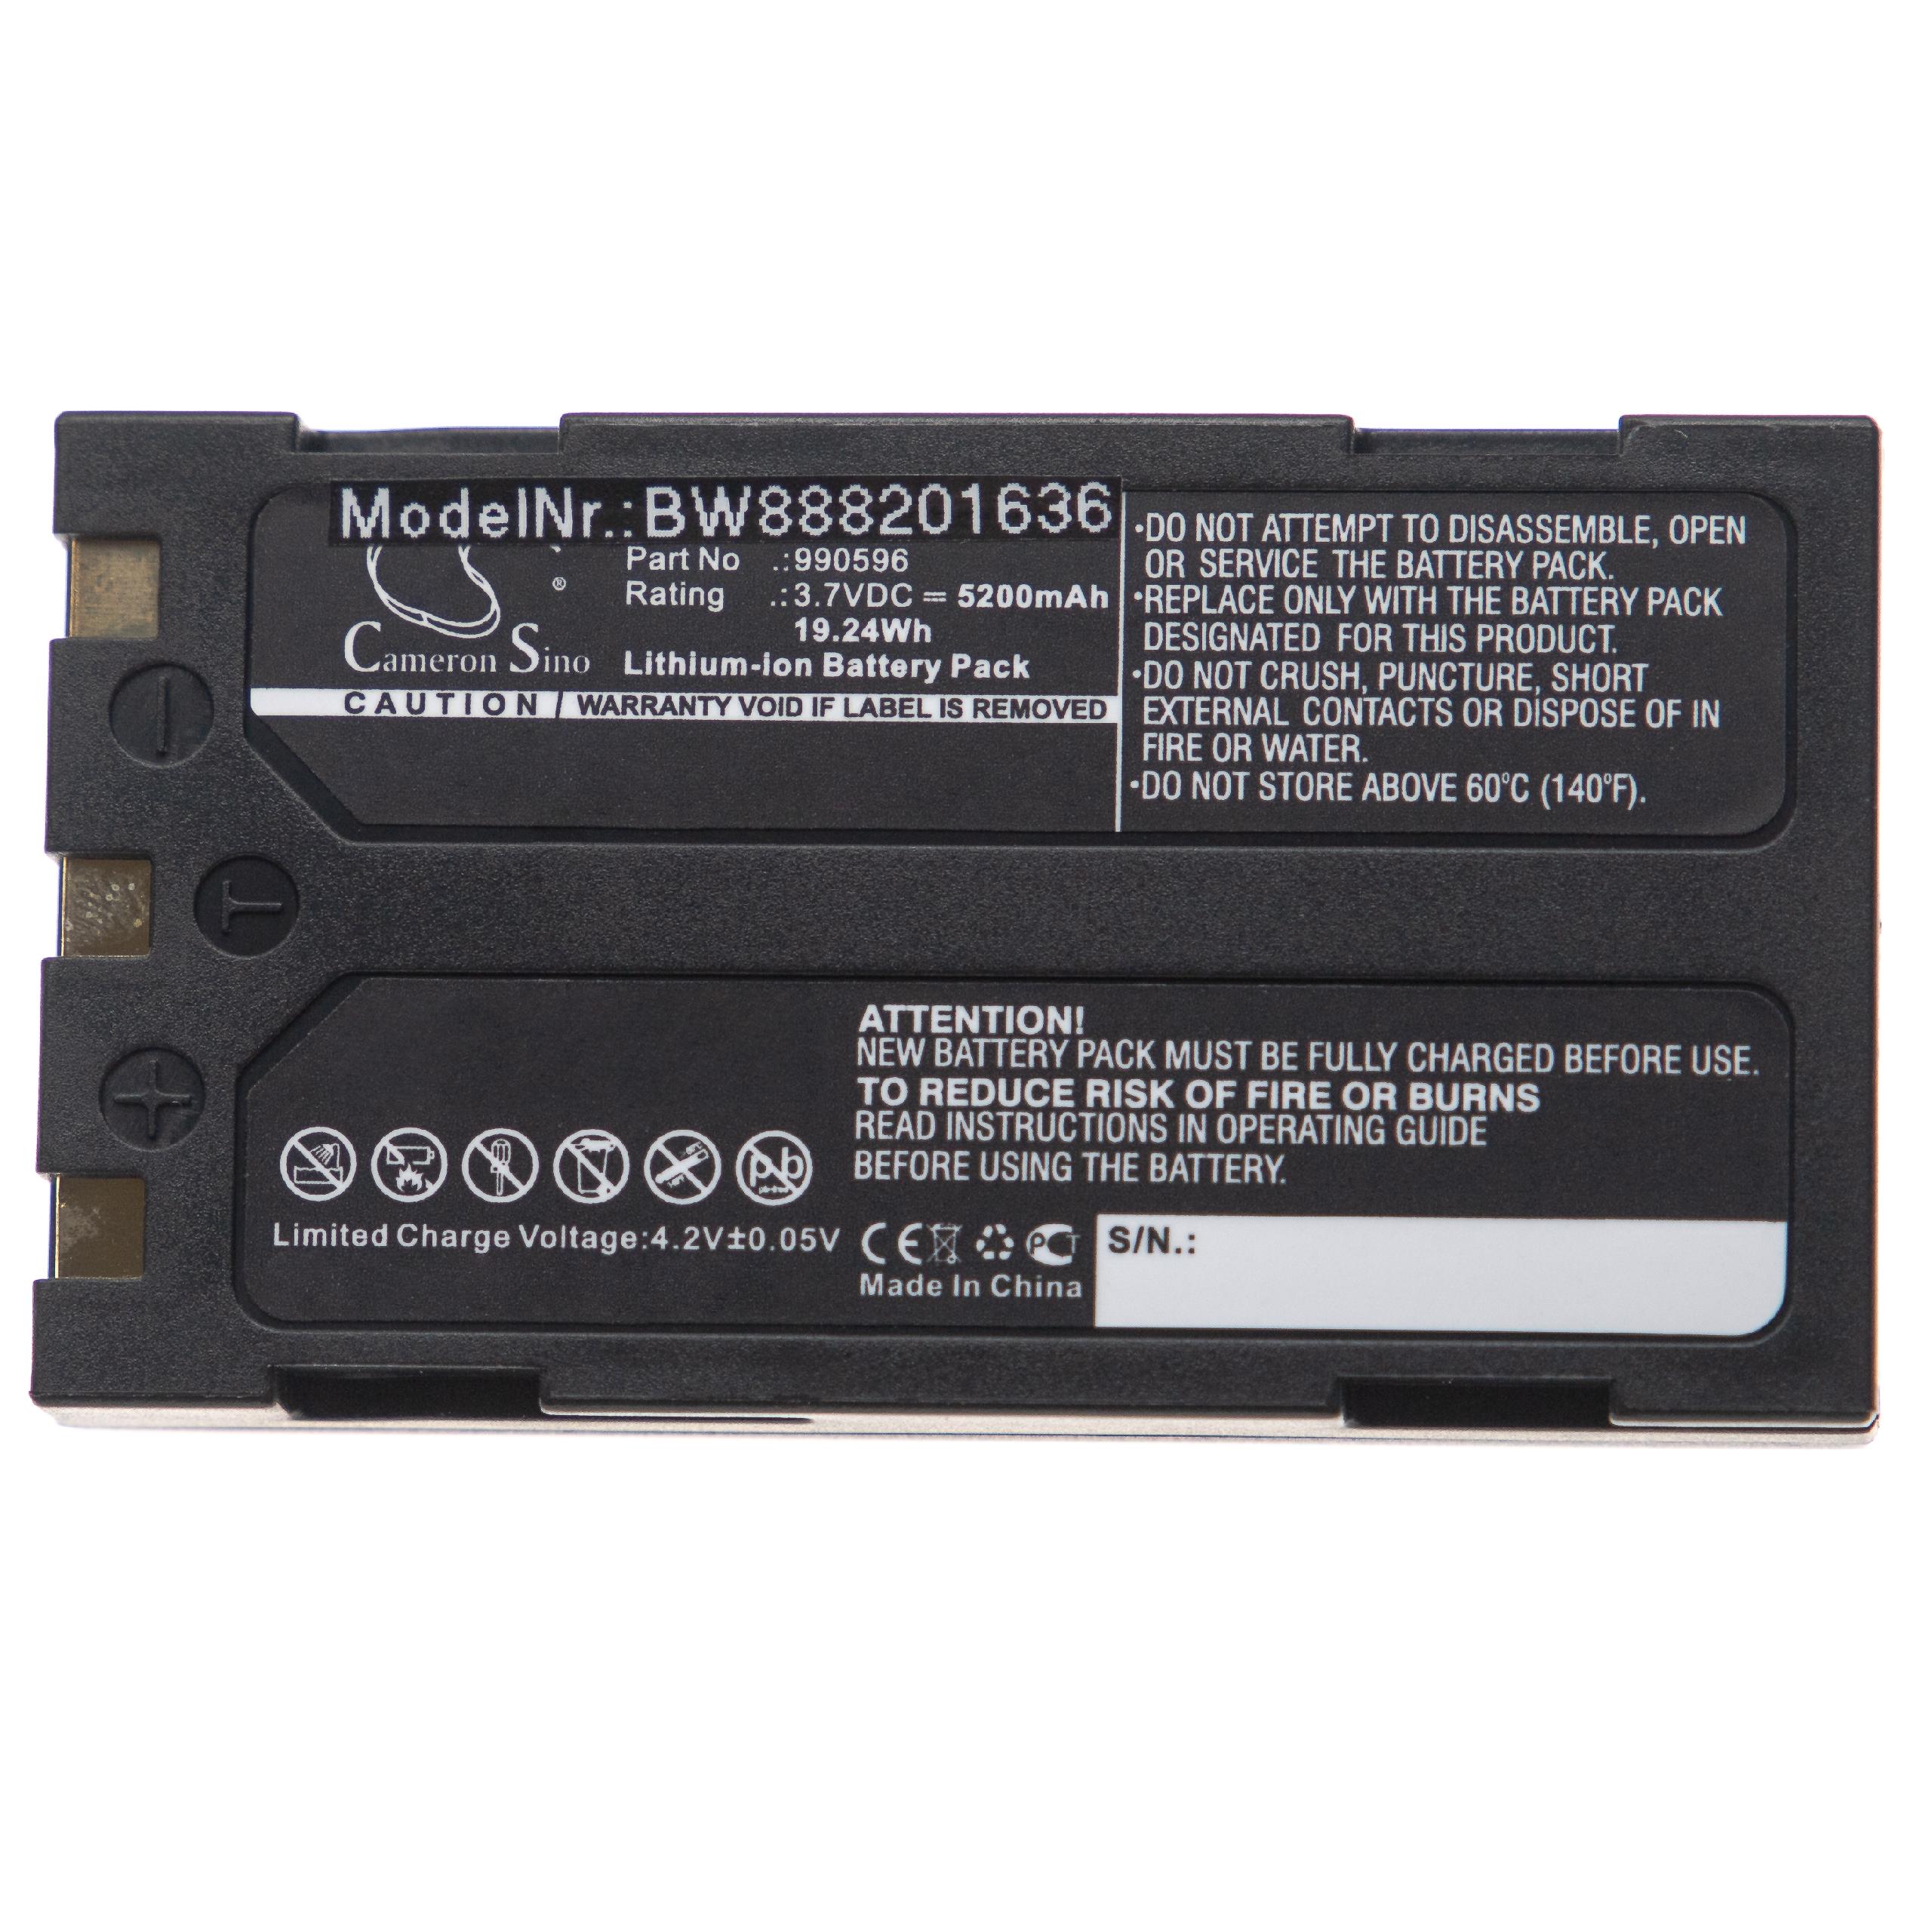 Laser Battery Replacement for Ridgid 990596, 990514 - 5200mAh 3.7V Li-Ion